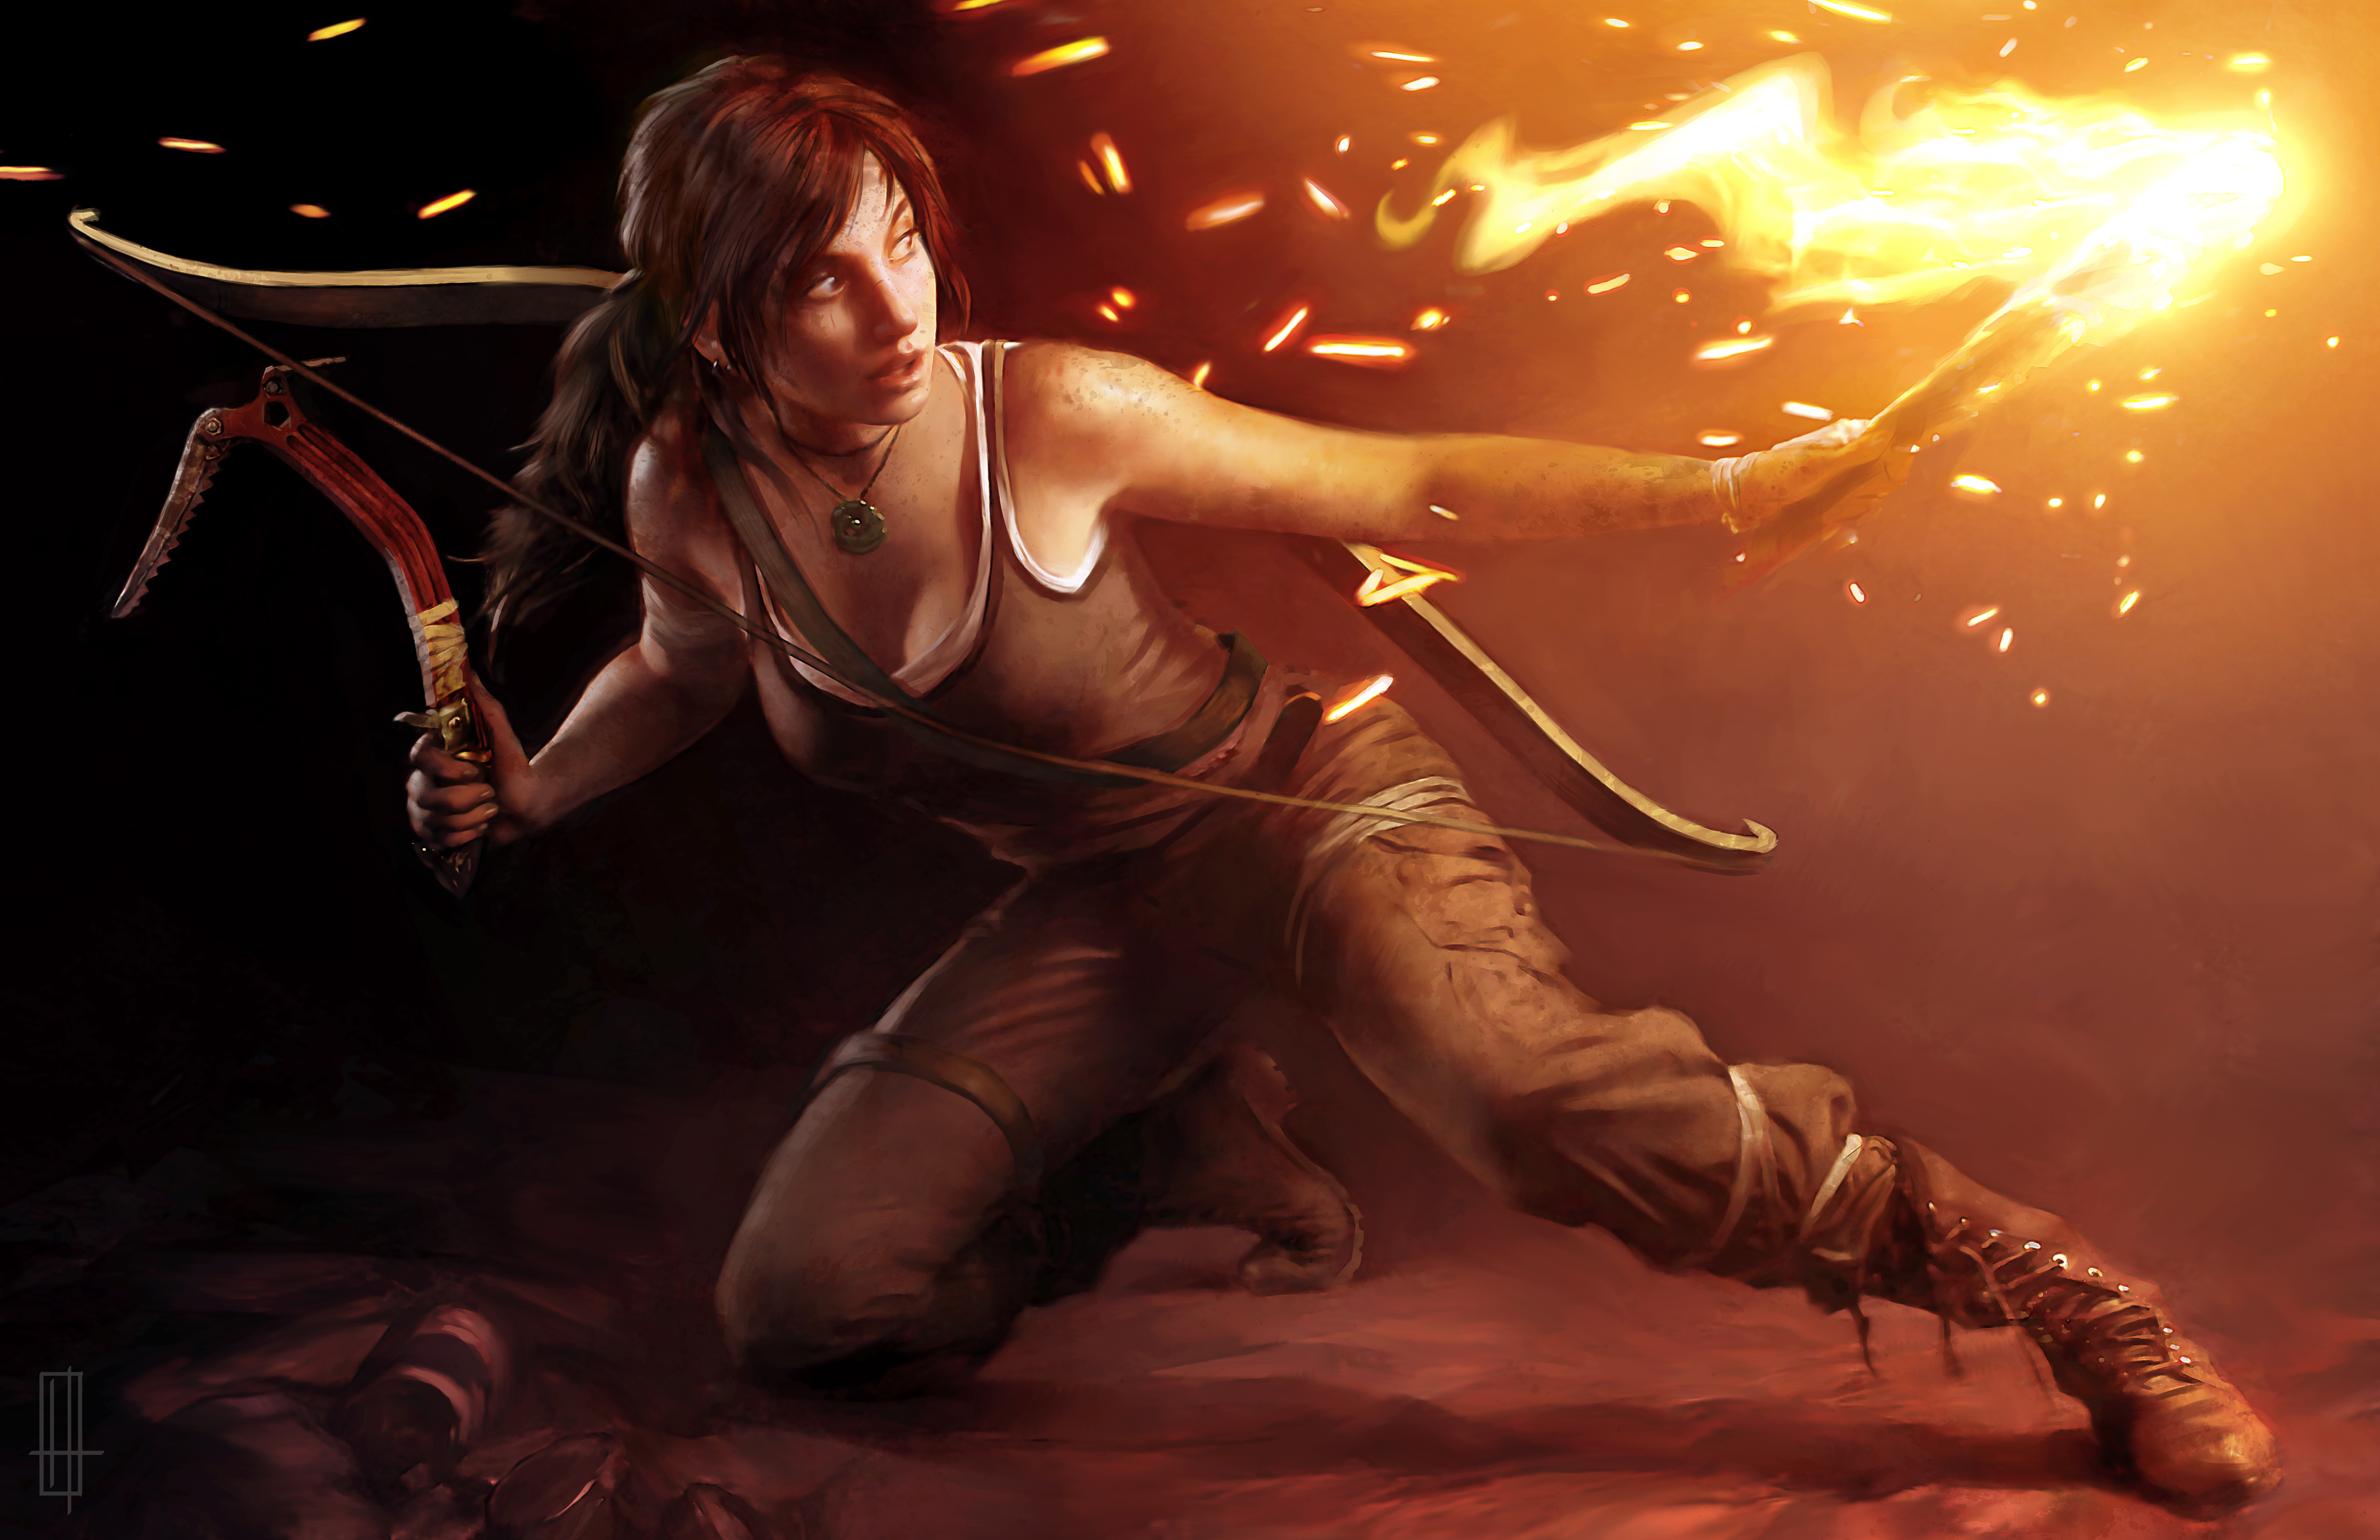 Digital Art Artwork Women Video Games Lara Croft Fire Torches Ponytail Brunette Tomb Raider Bow Long 5109x3306